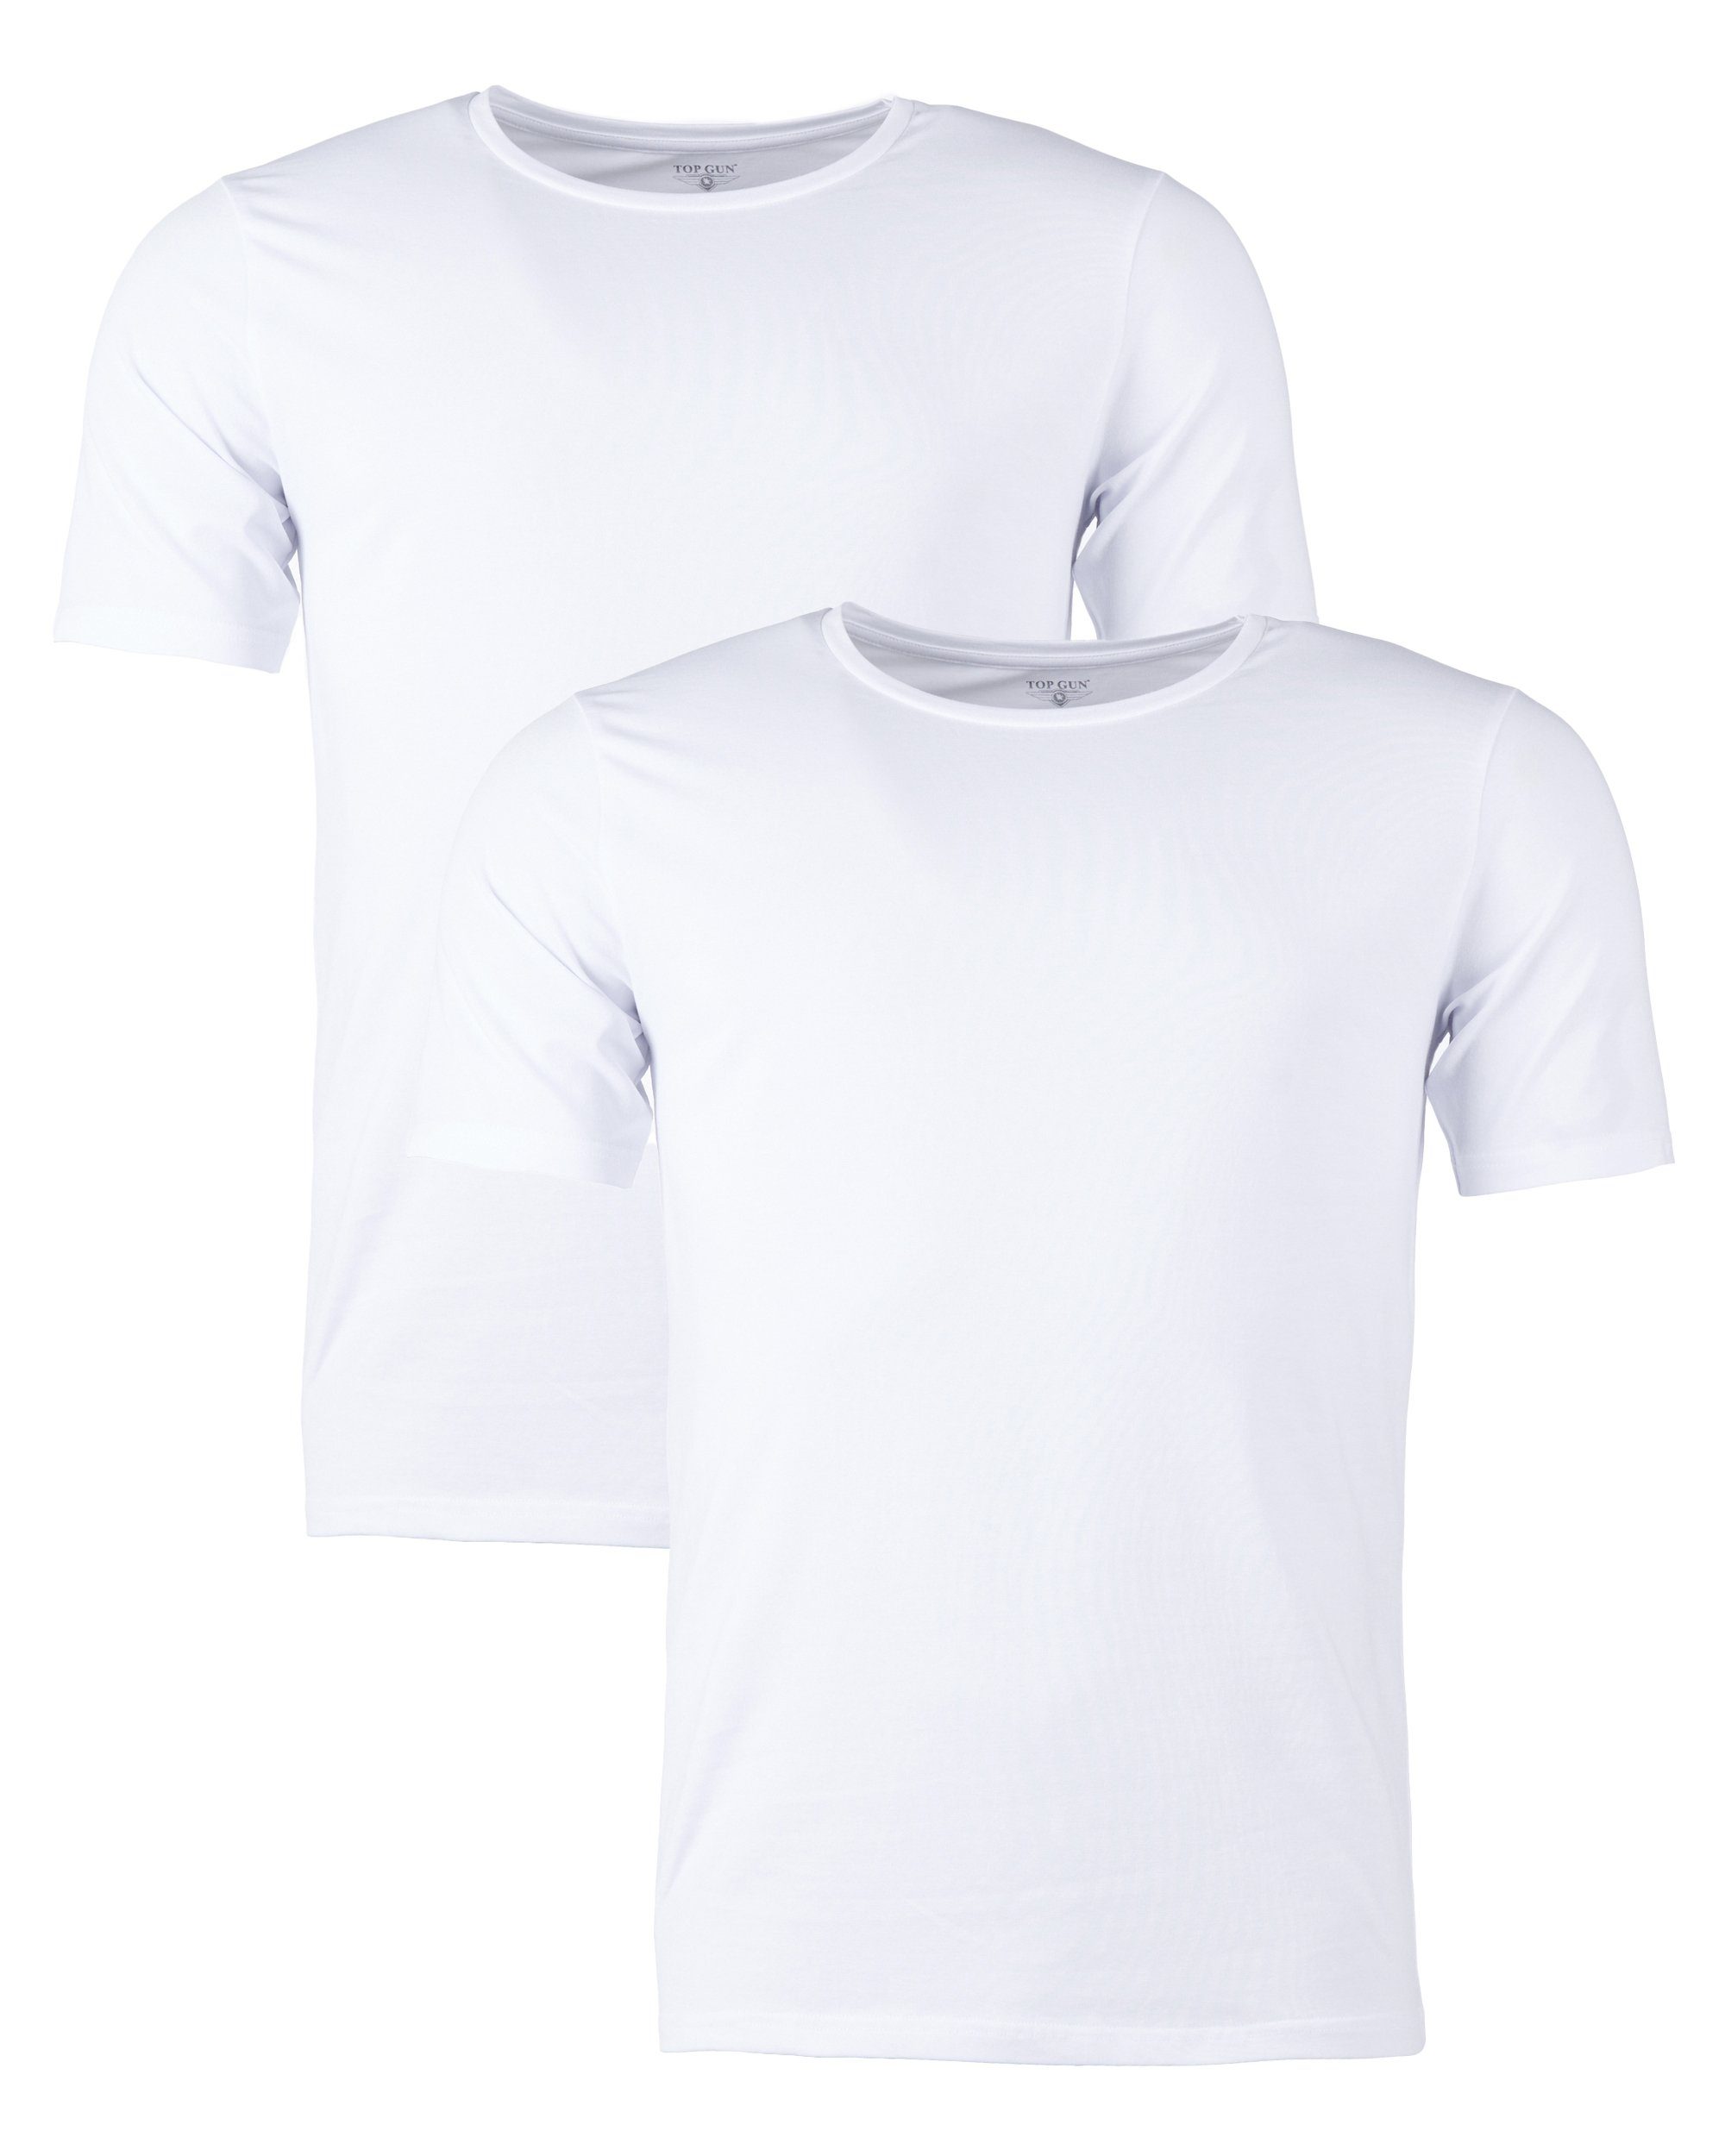 TGUW003 TOP T-Shirt GUN white